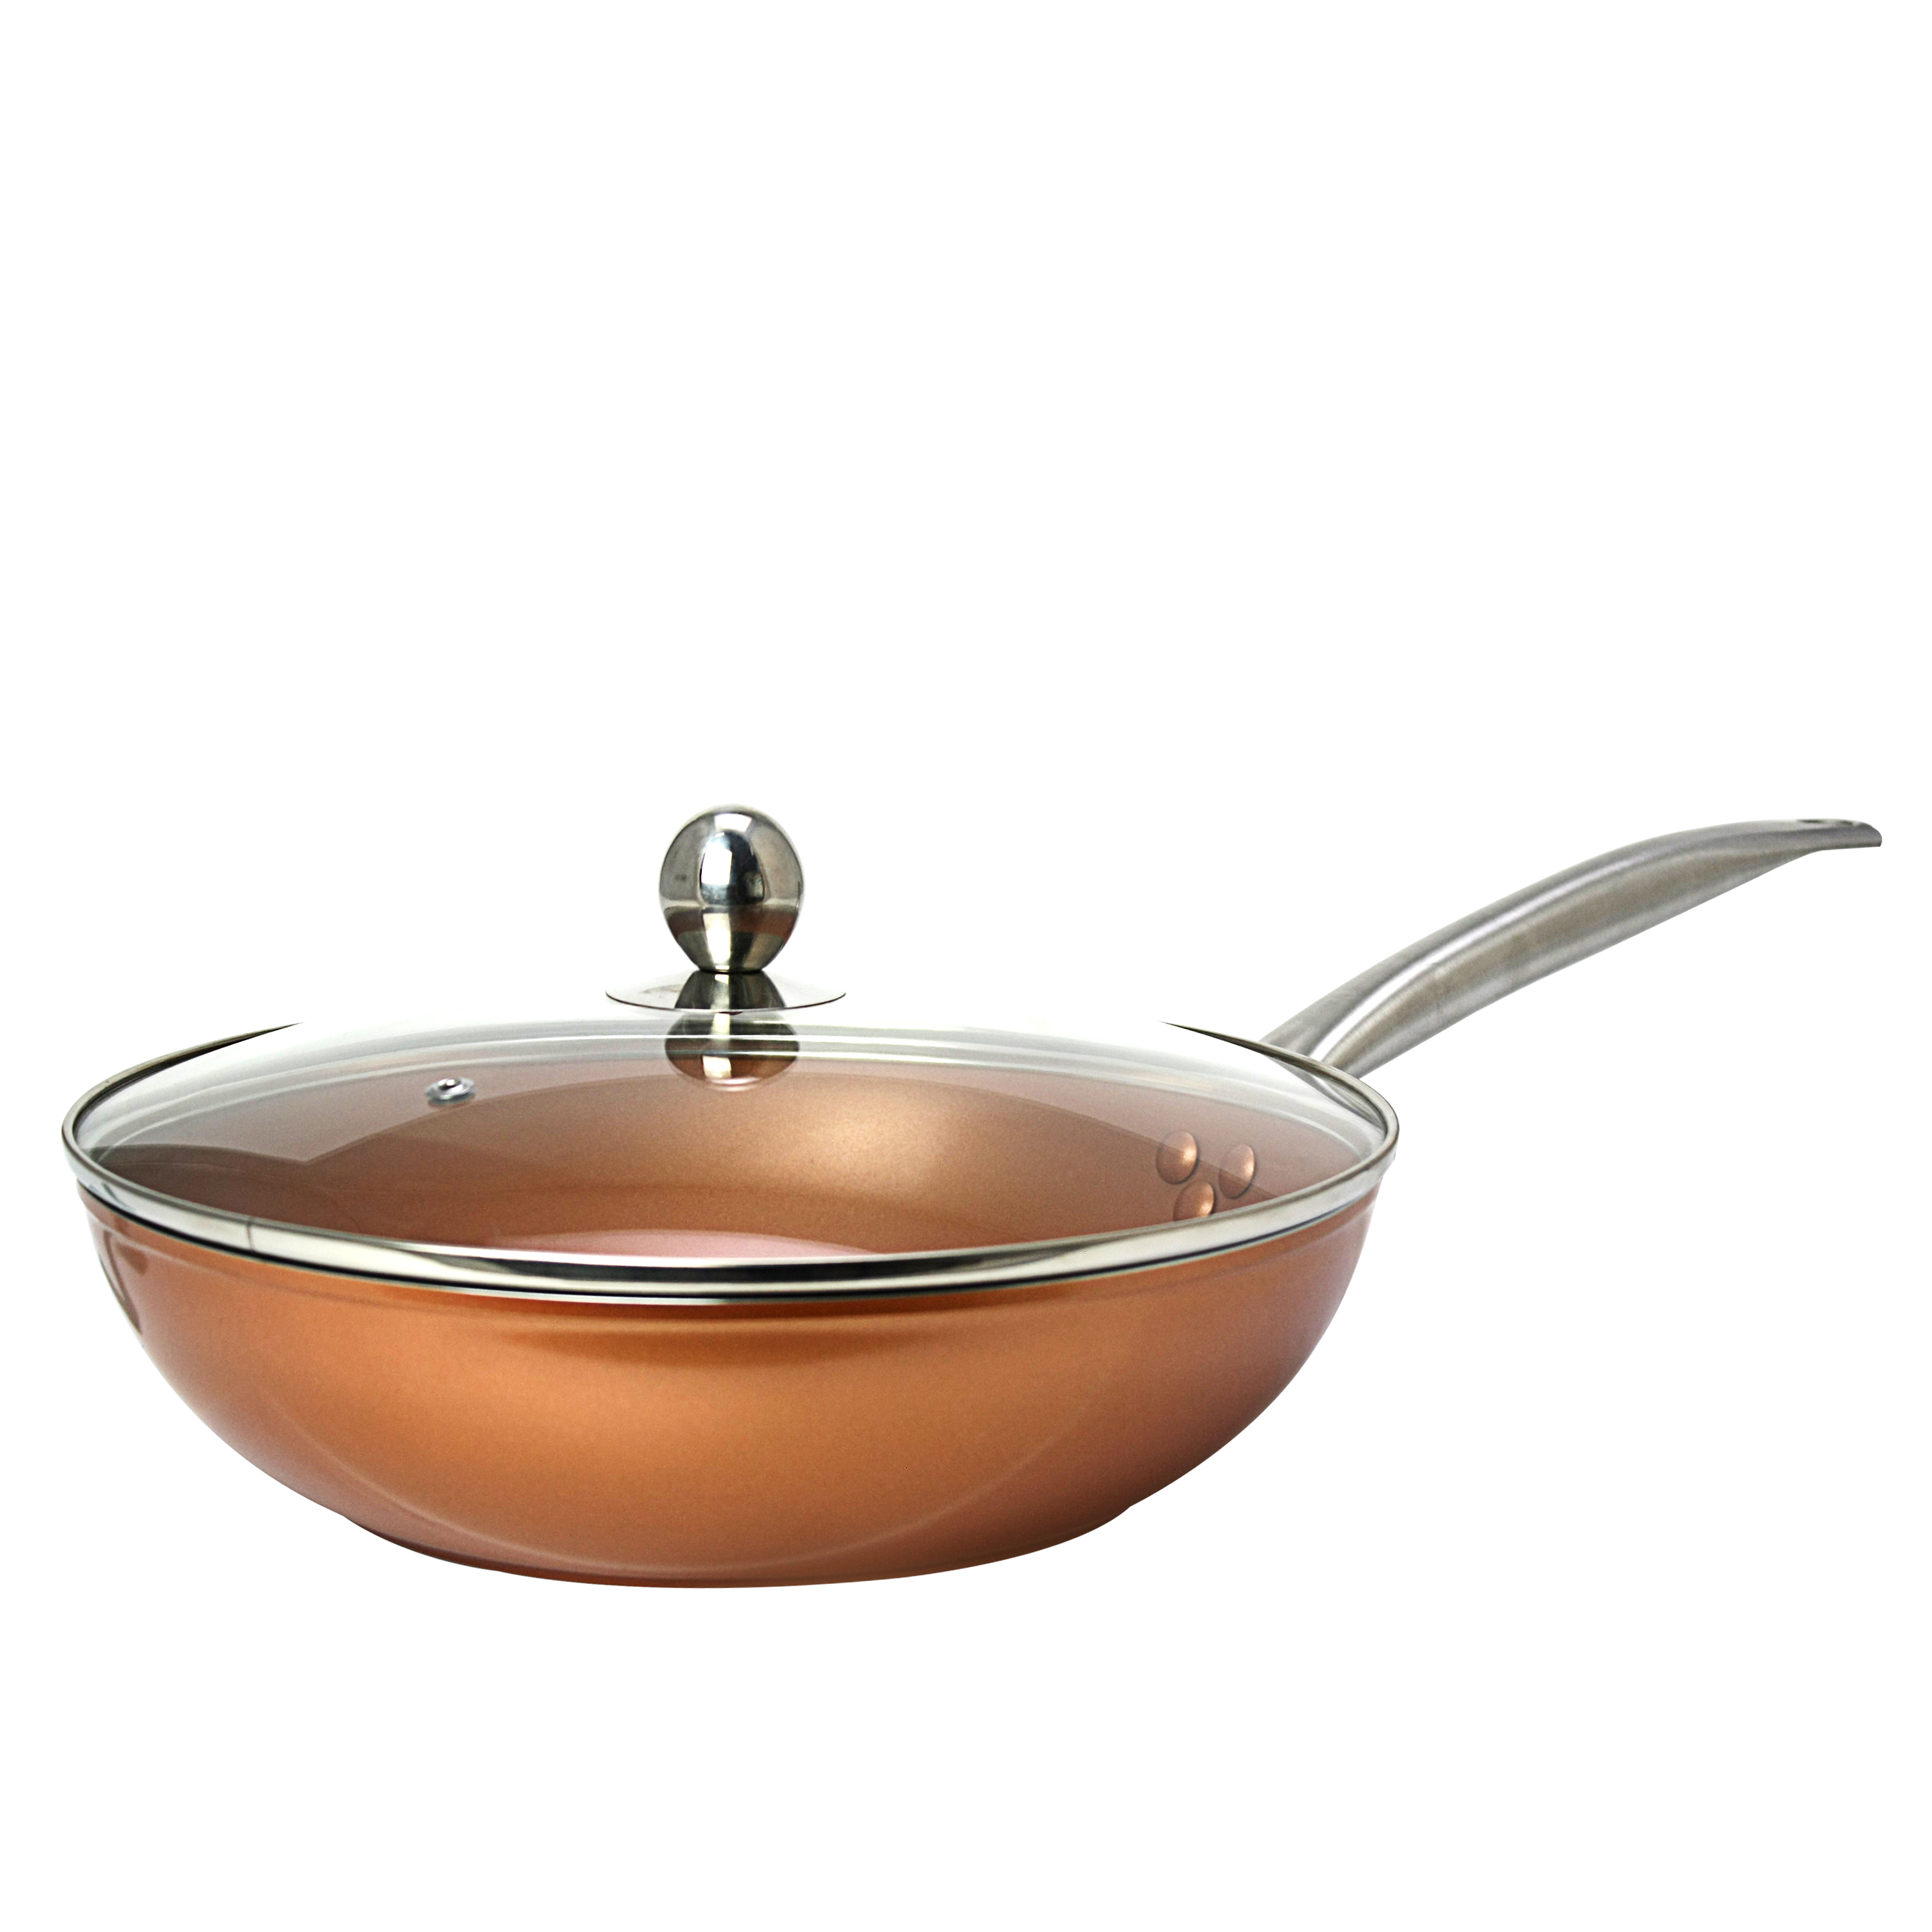 Masflex 28 cm Copper Deep Fry Pan 